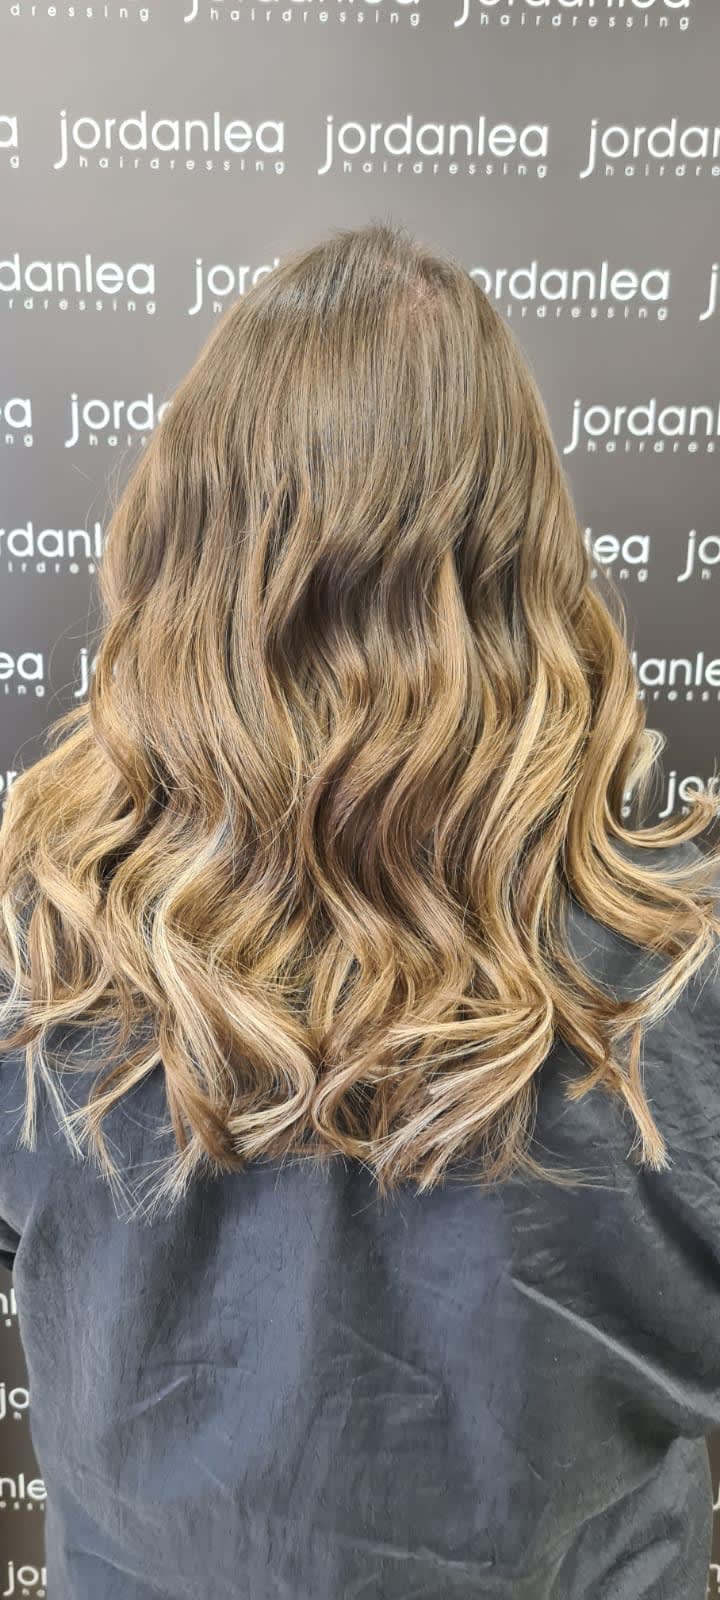 Images Jordan Lea Hairdressing